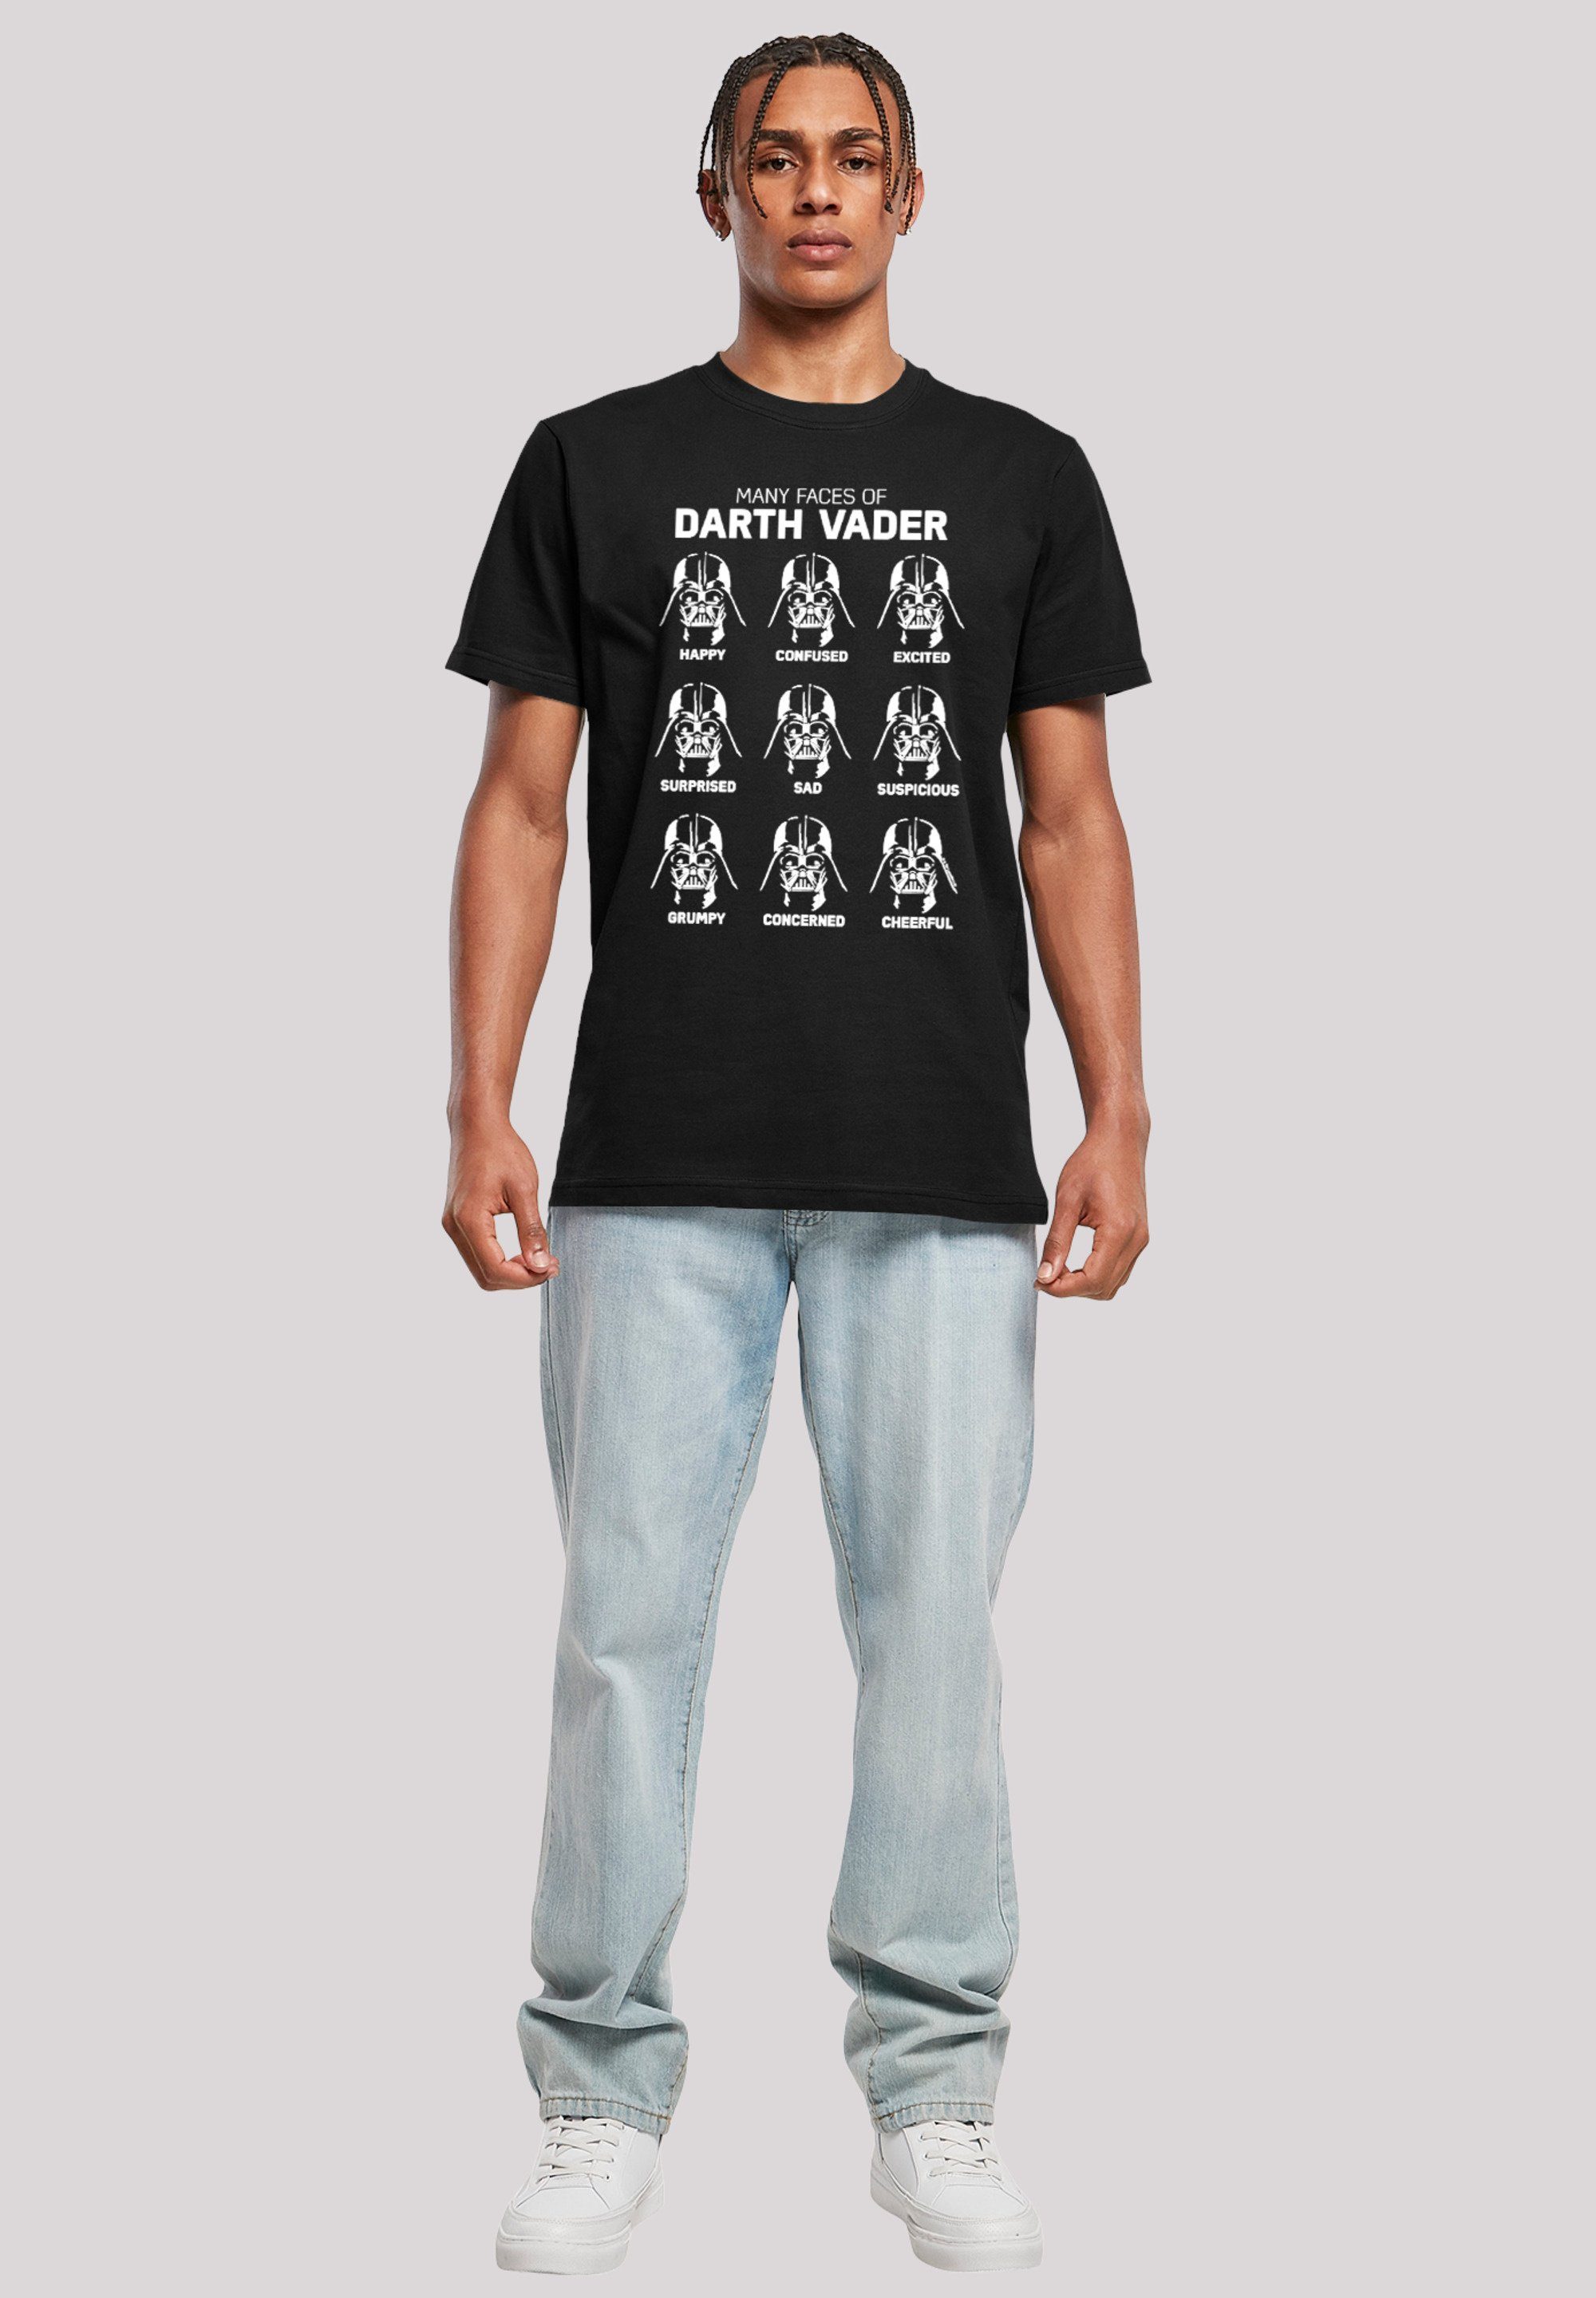 F4NT4STIC T-Shirt Star Wars Darth Vader s Of Many The Print